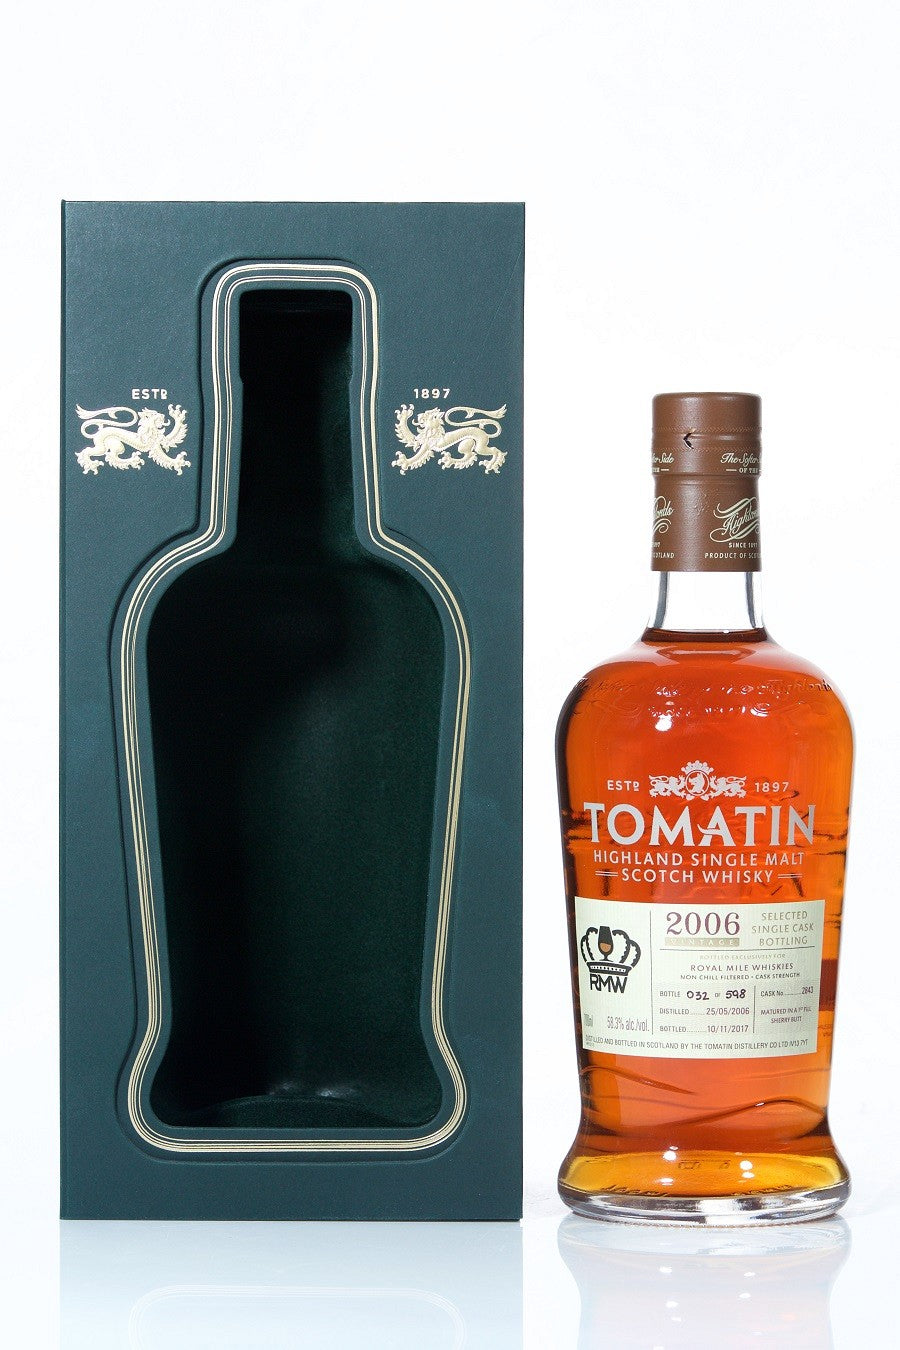 Tomatin 2006 RMW Exclusive 58.3% | single malt scotch whisky